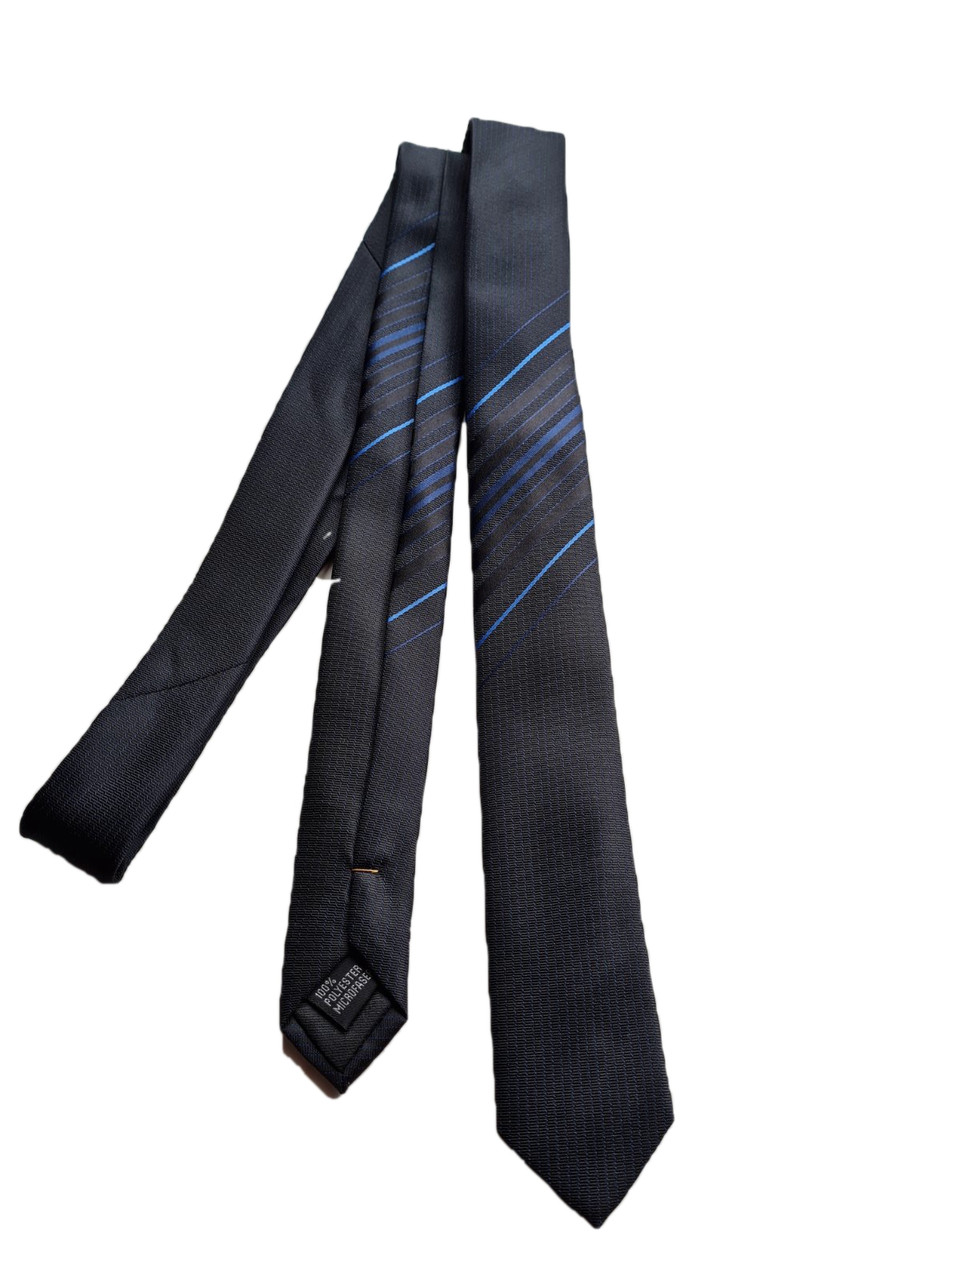 Класична чоловіча краватка Voronin 5 см чорна 39312